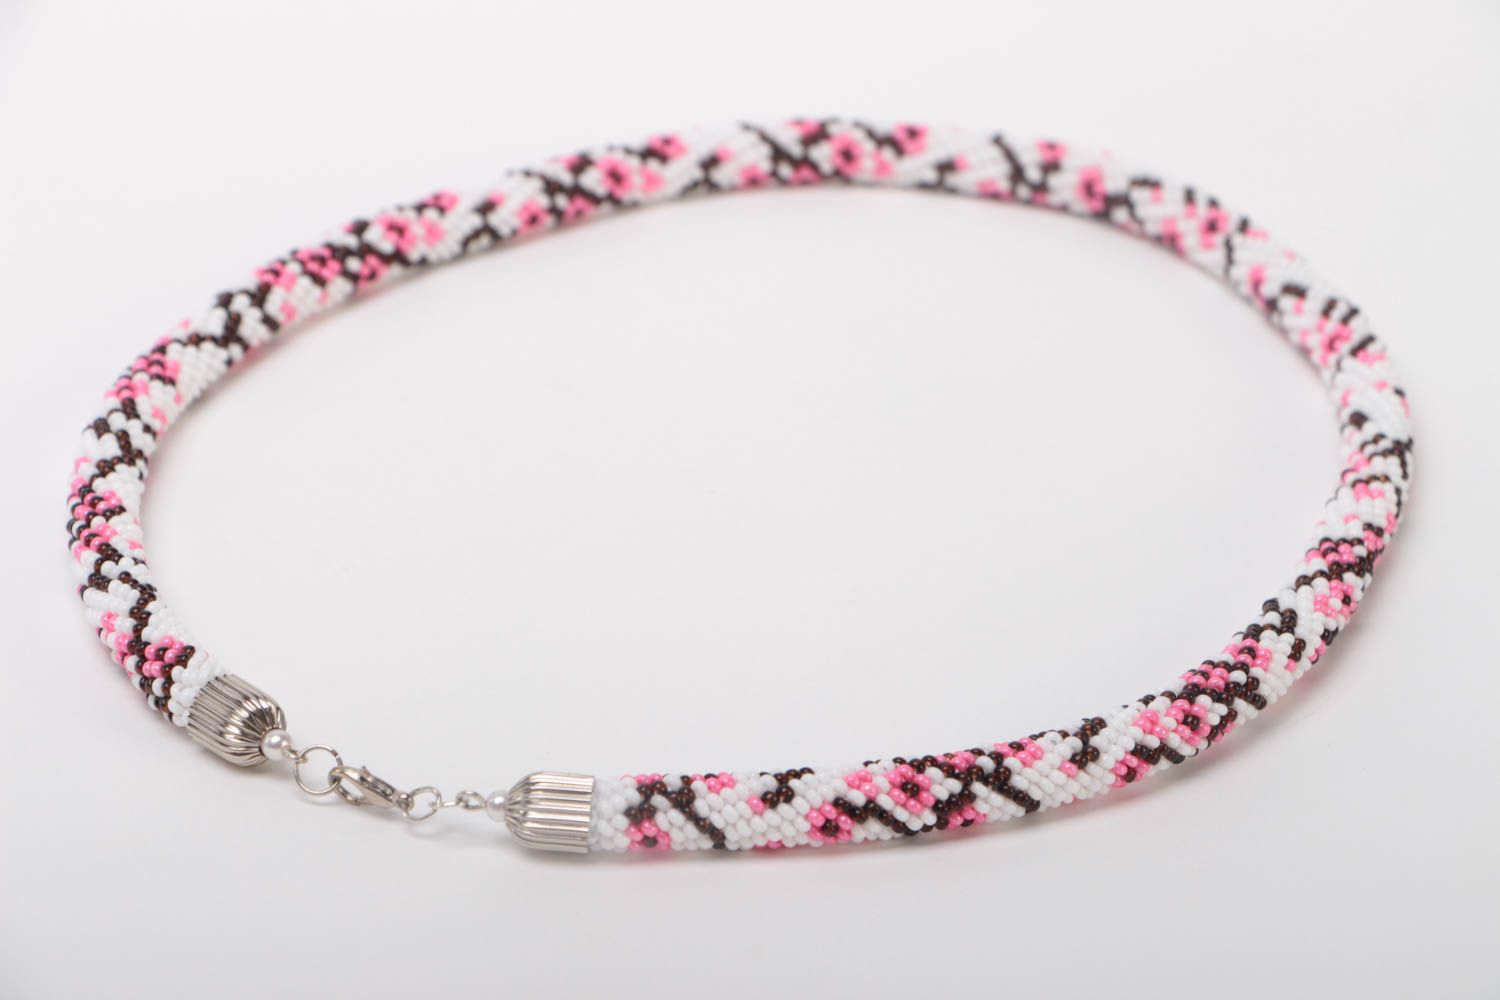 Unusual handmade beaded cord necklace designer fashion jewelry gift ideas photo 4